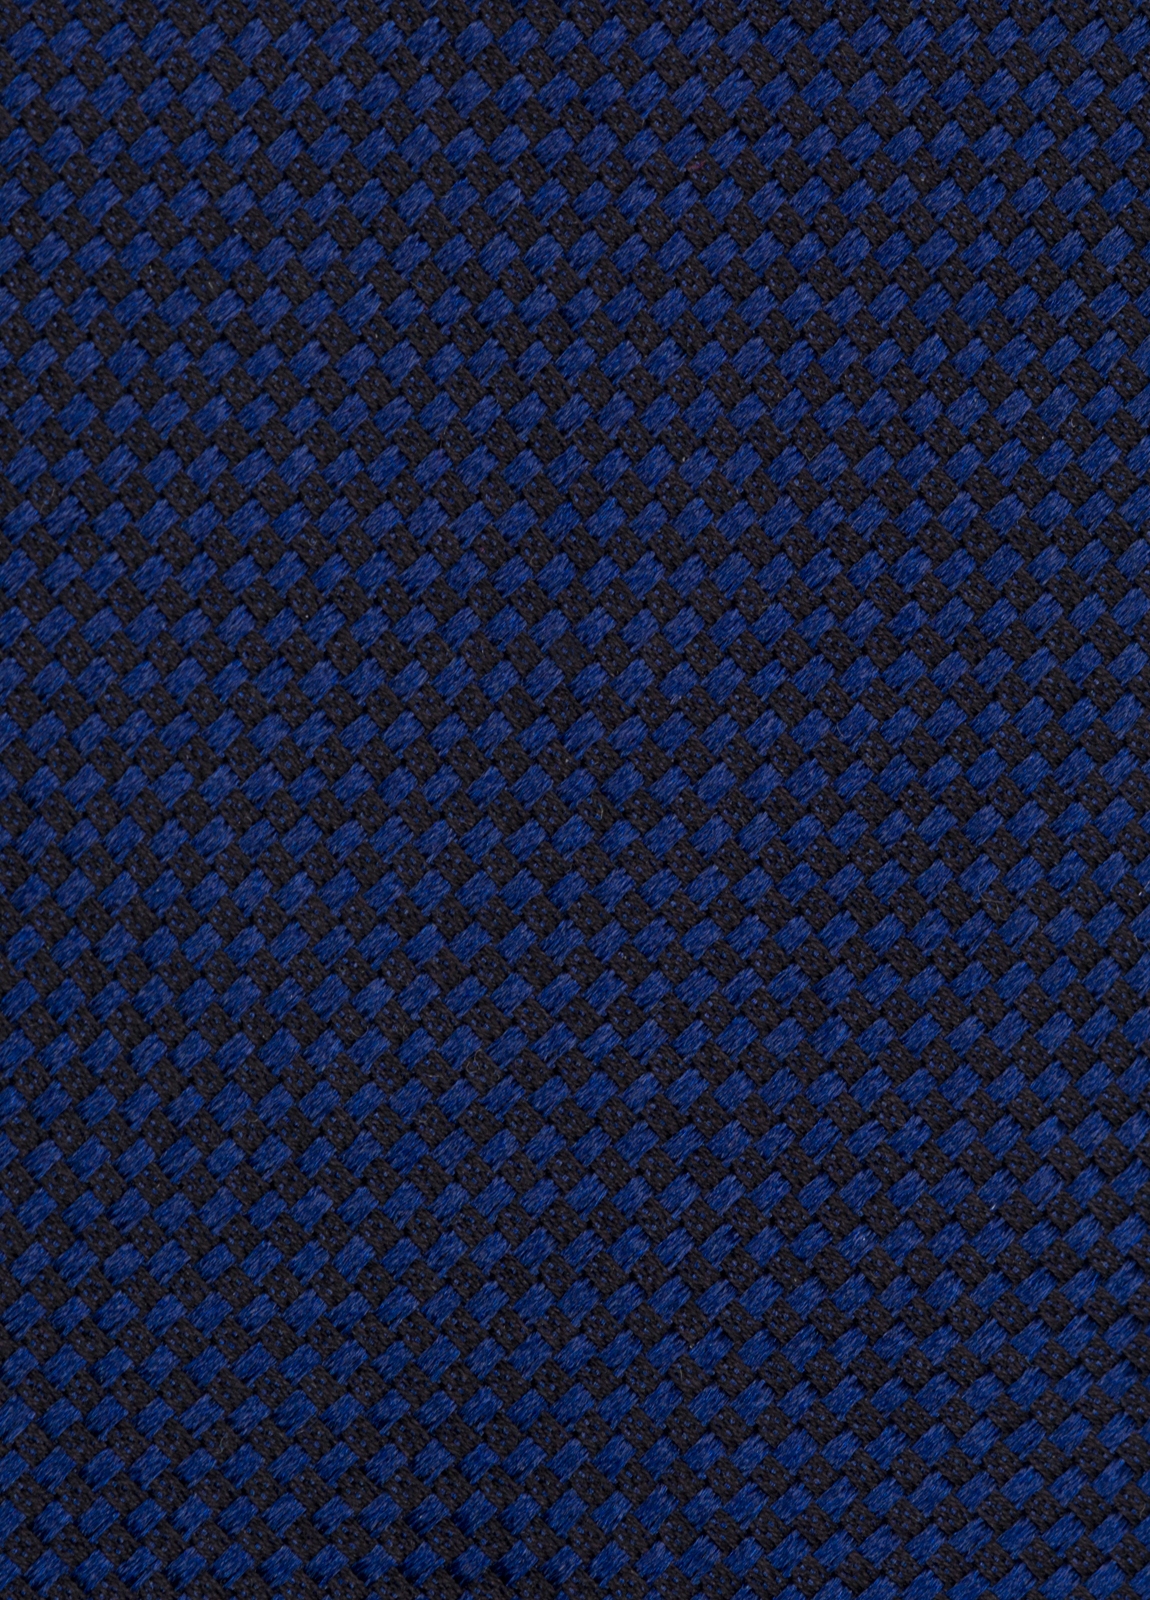 Corbata FUREST COLECCIÓN color marino textura - Ítem2